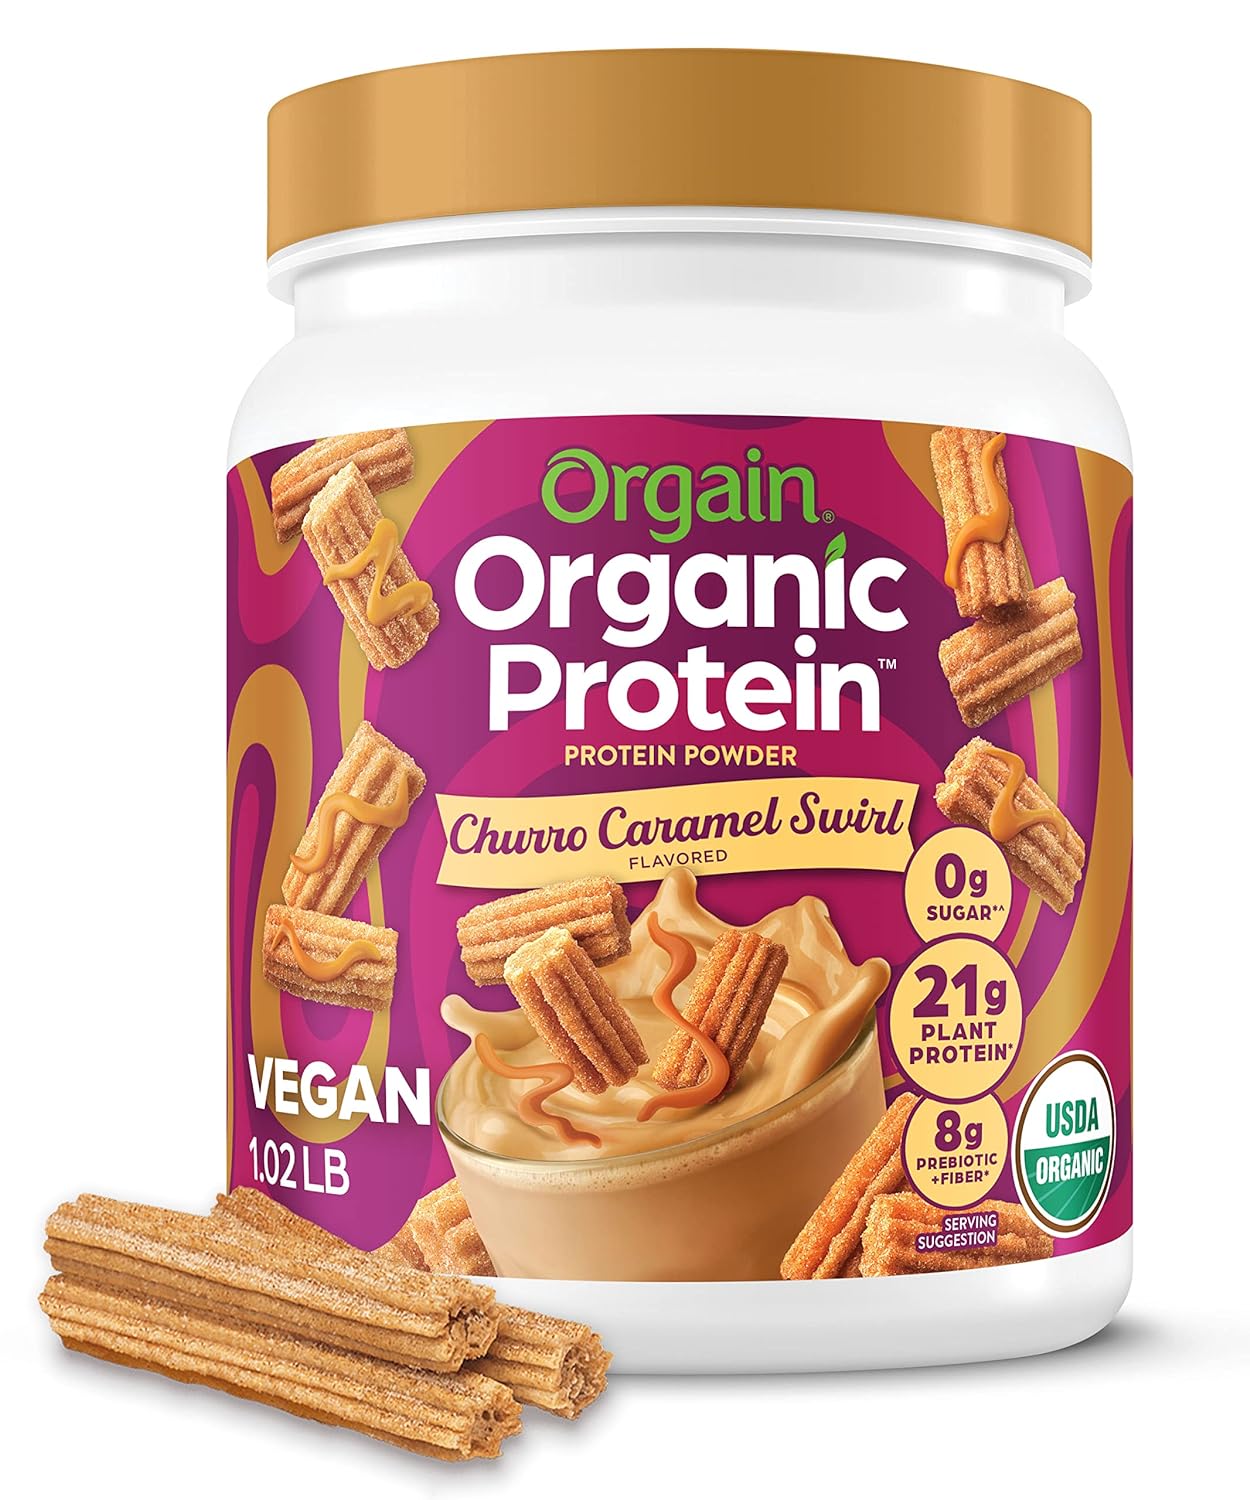 Orgain Organic Vegan Protein Powder, Churro Caramel Swirl - 21g Plant